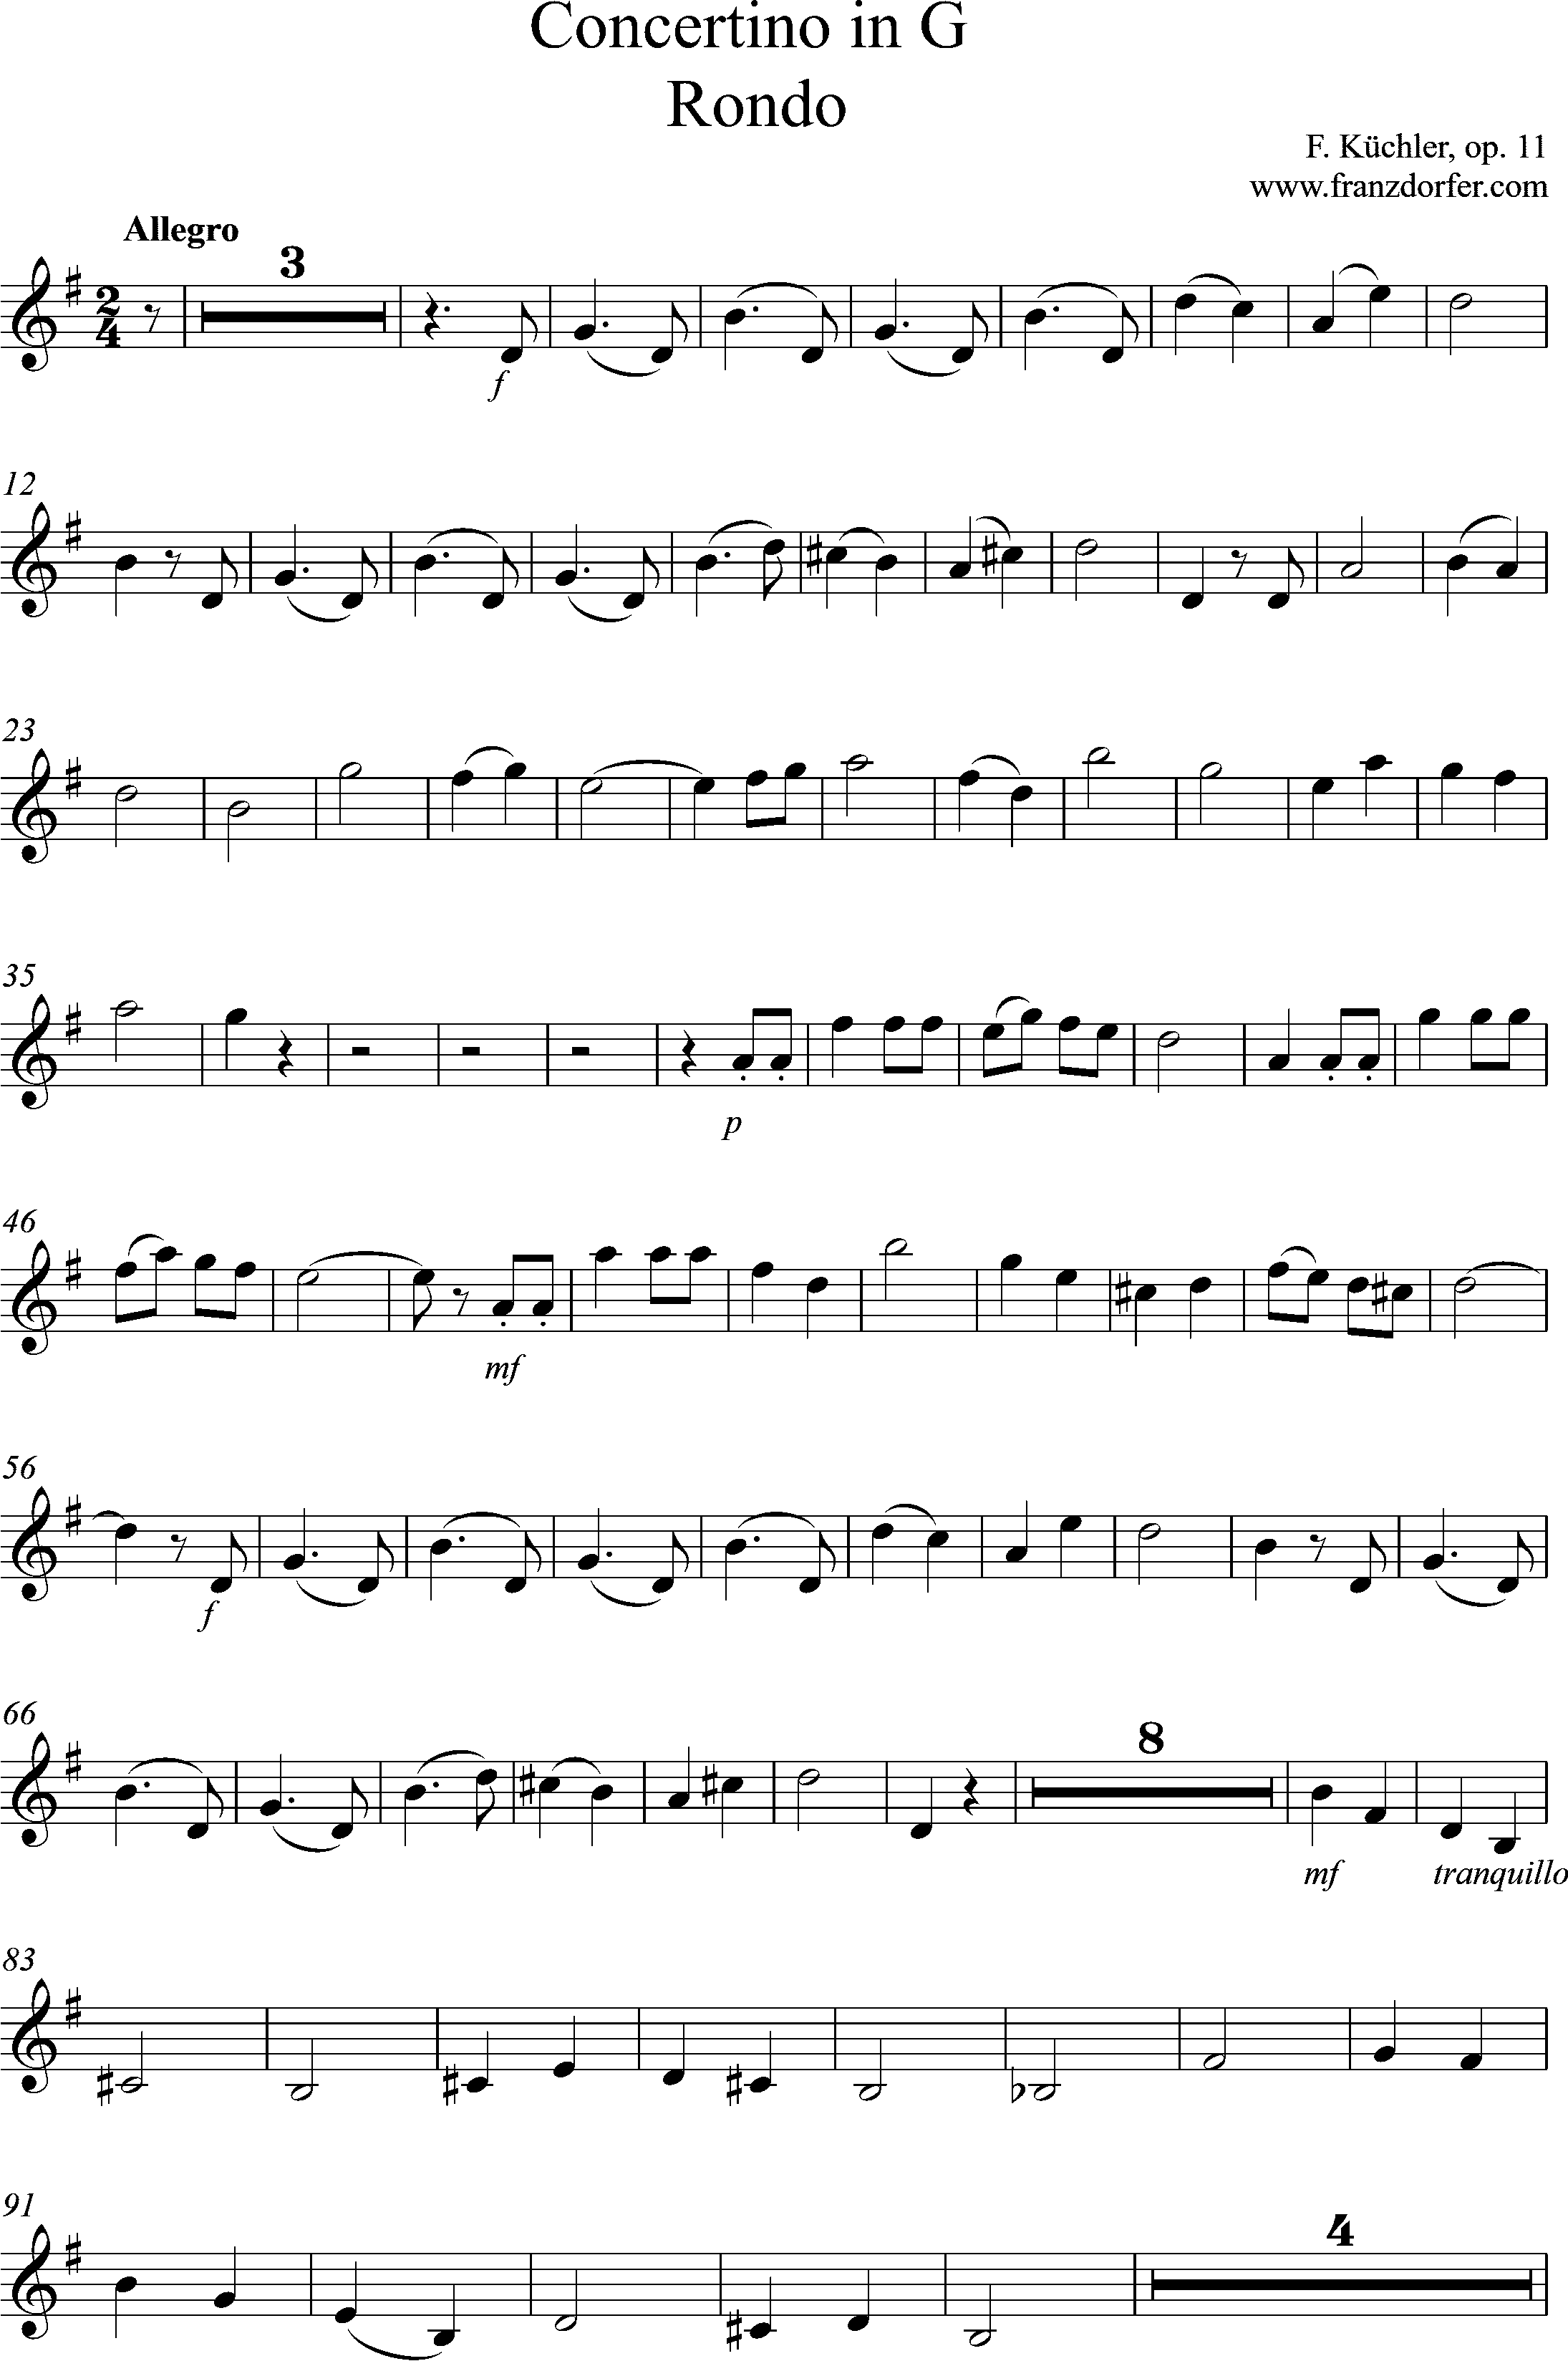 Rondo, Solopart Concertino in G-op11 küchler